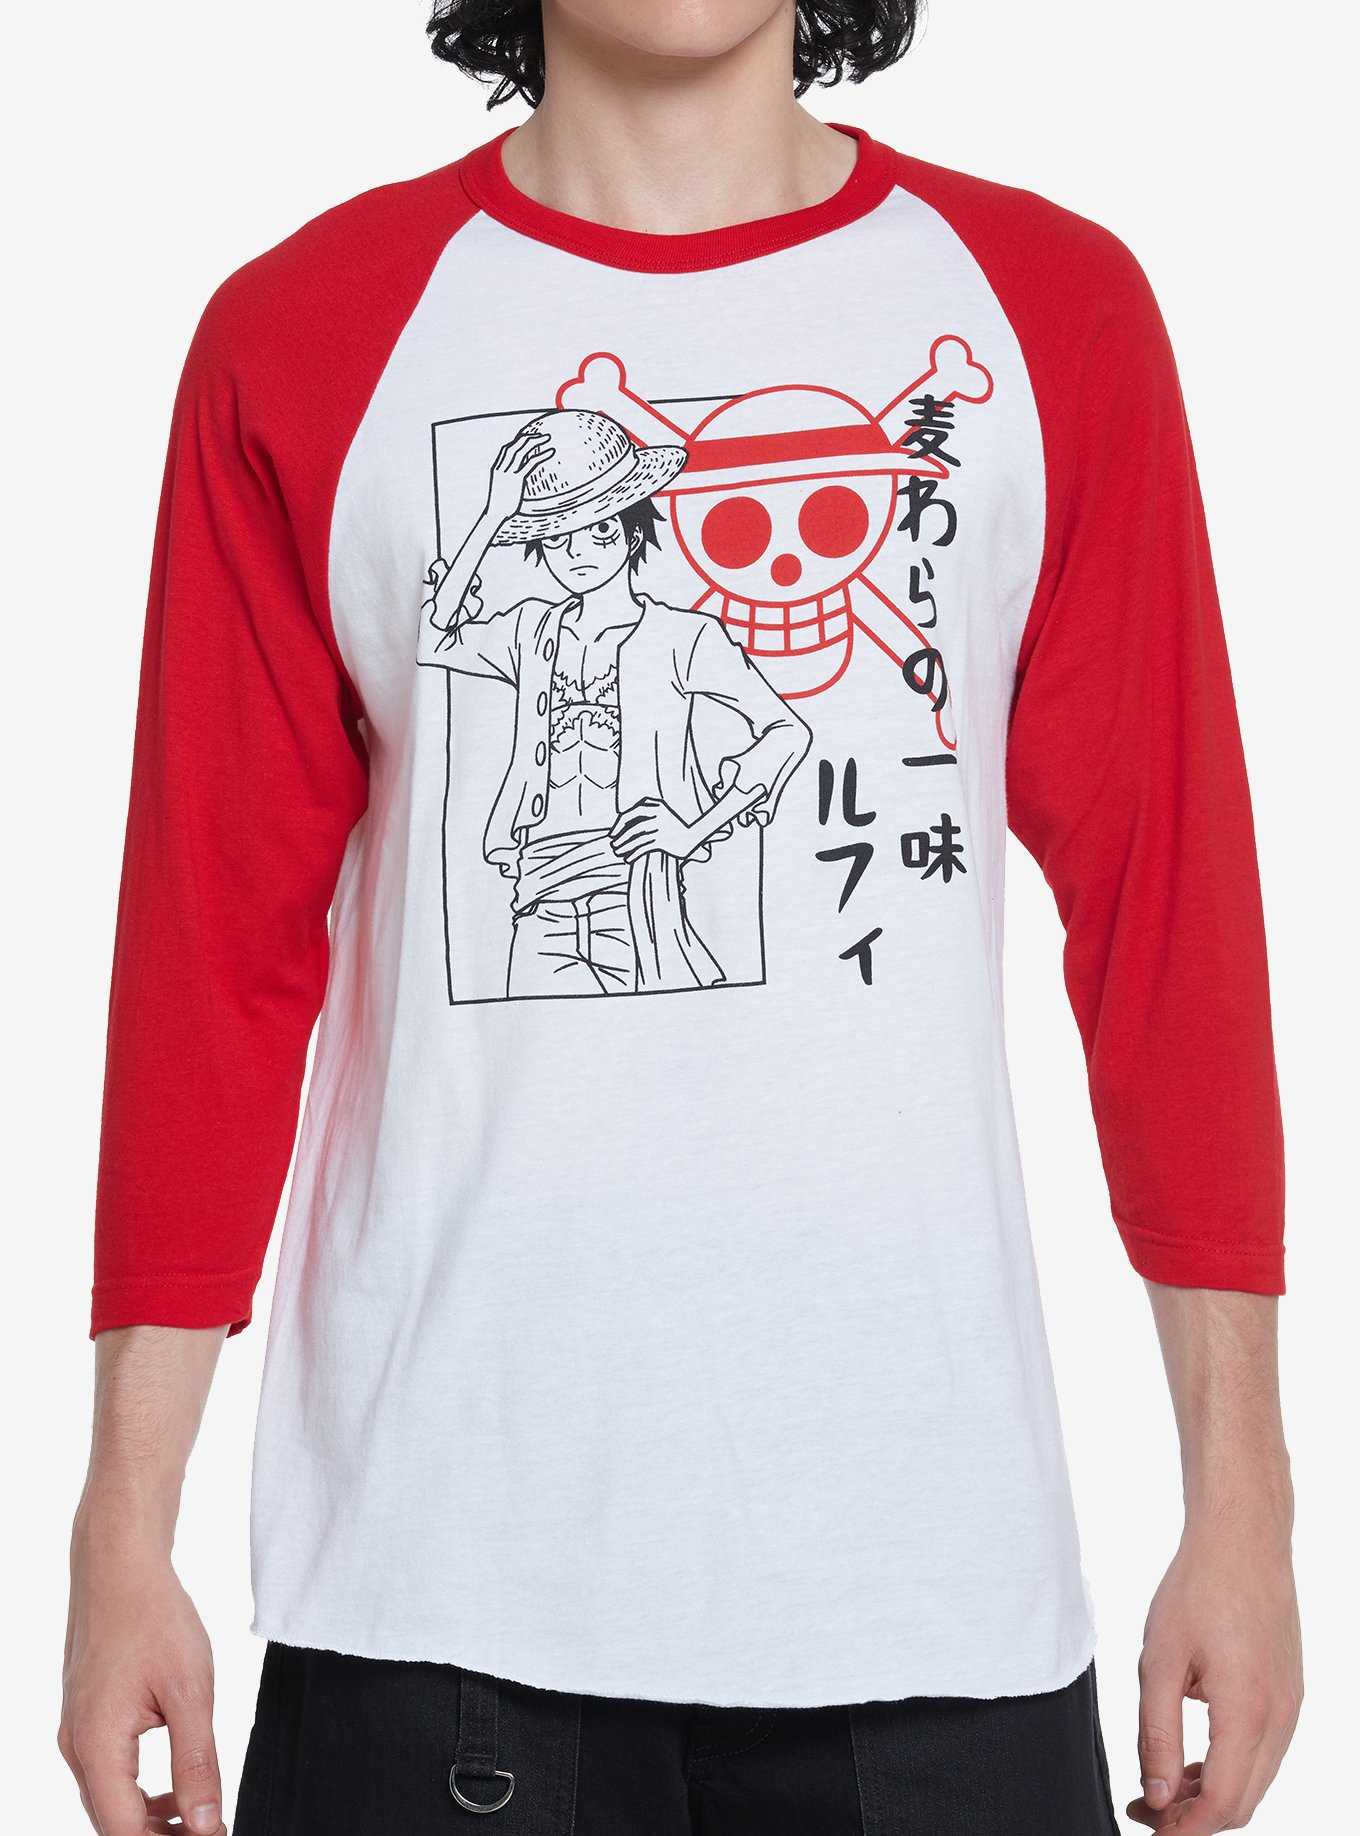 One Piece Luffy Red Jolly Roger Raglan T-Shirt, , hi-res